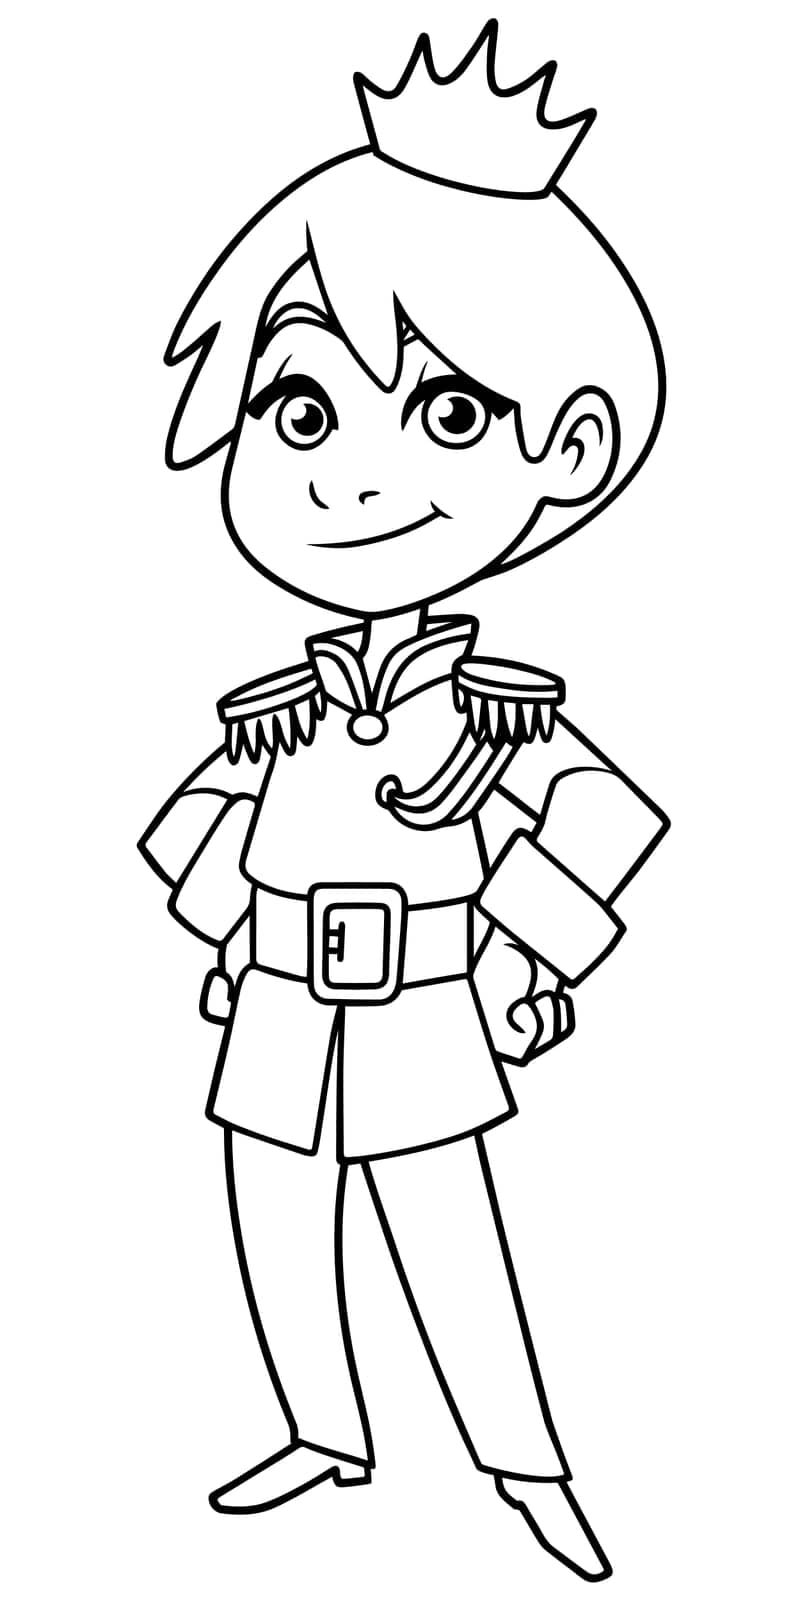 Line art illustration of happy little prince smiling on white background.